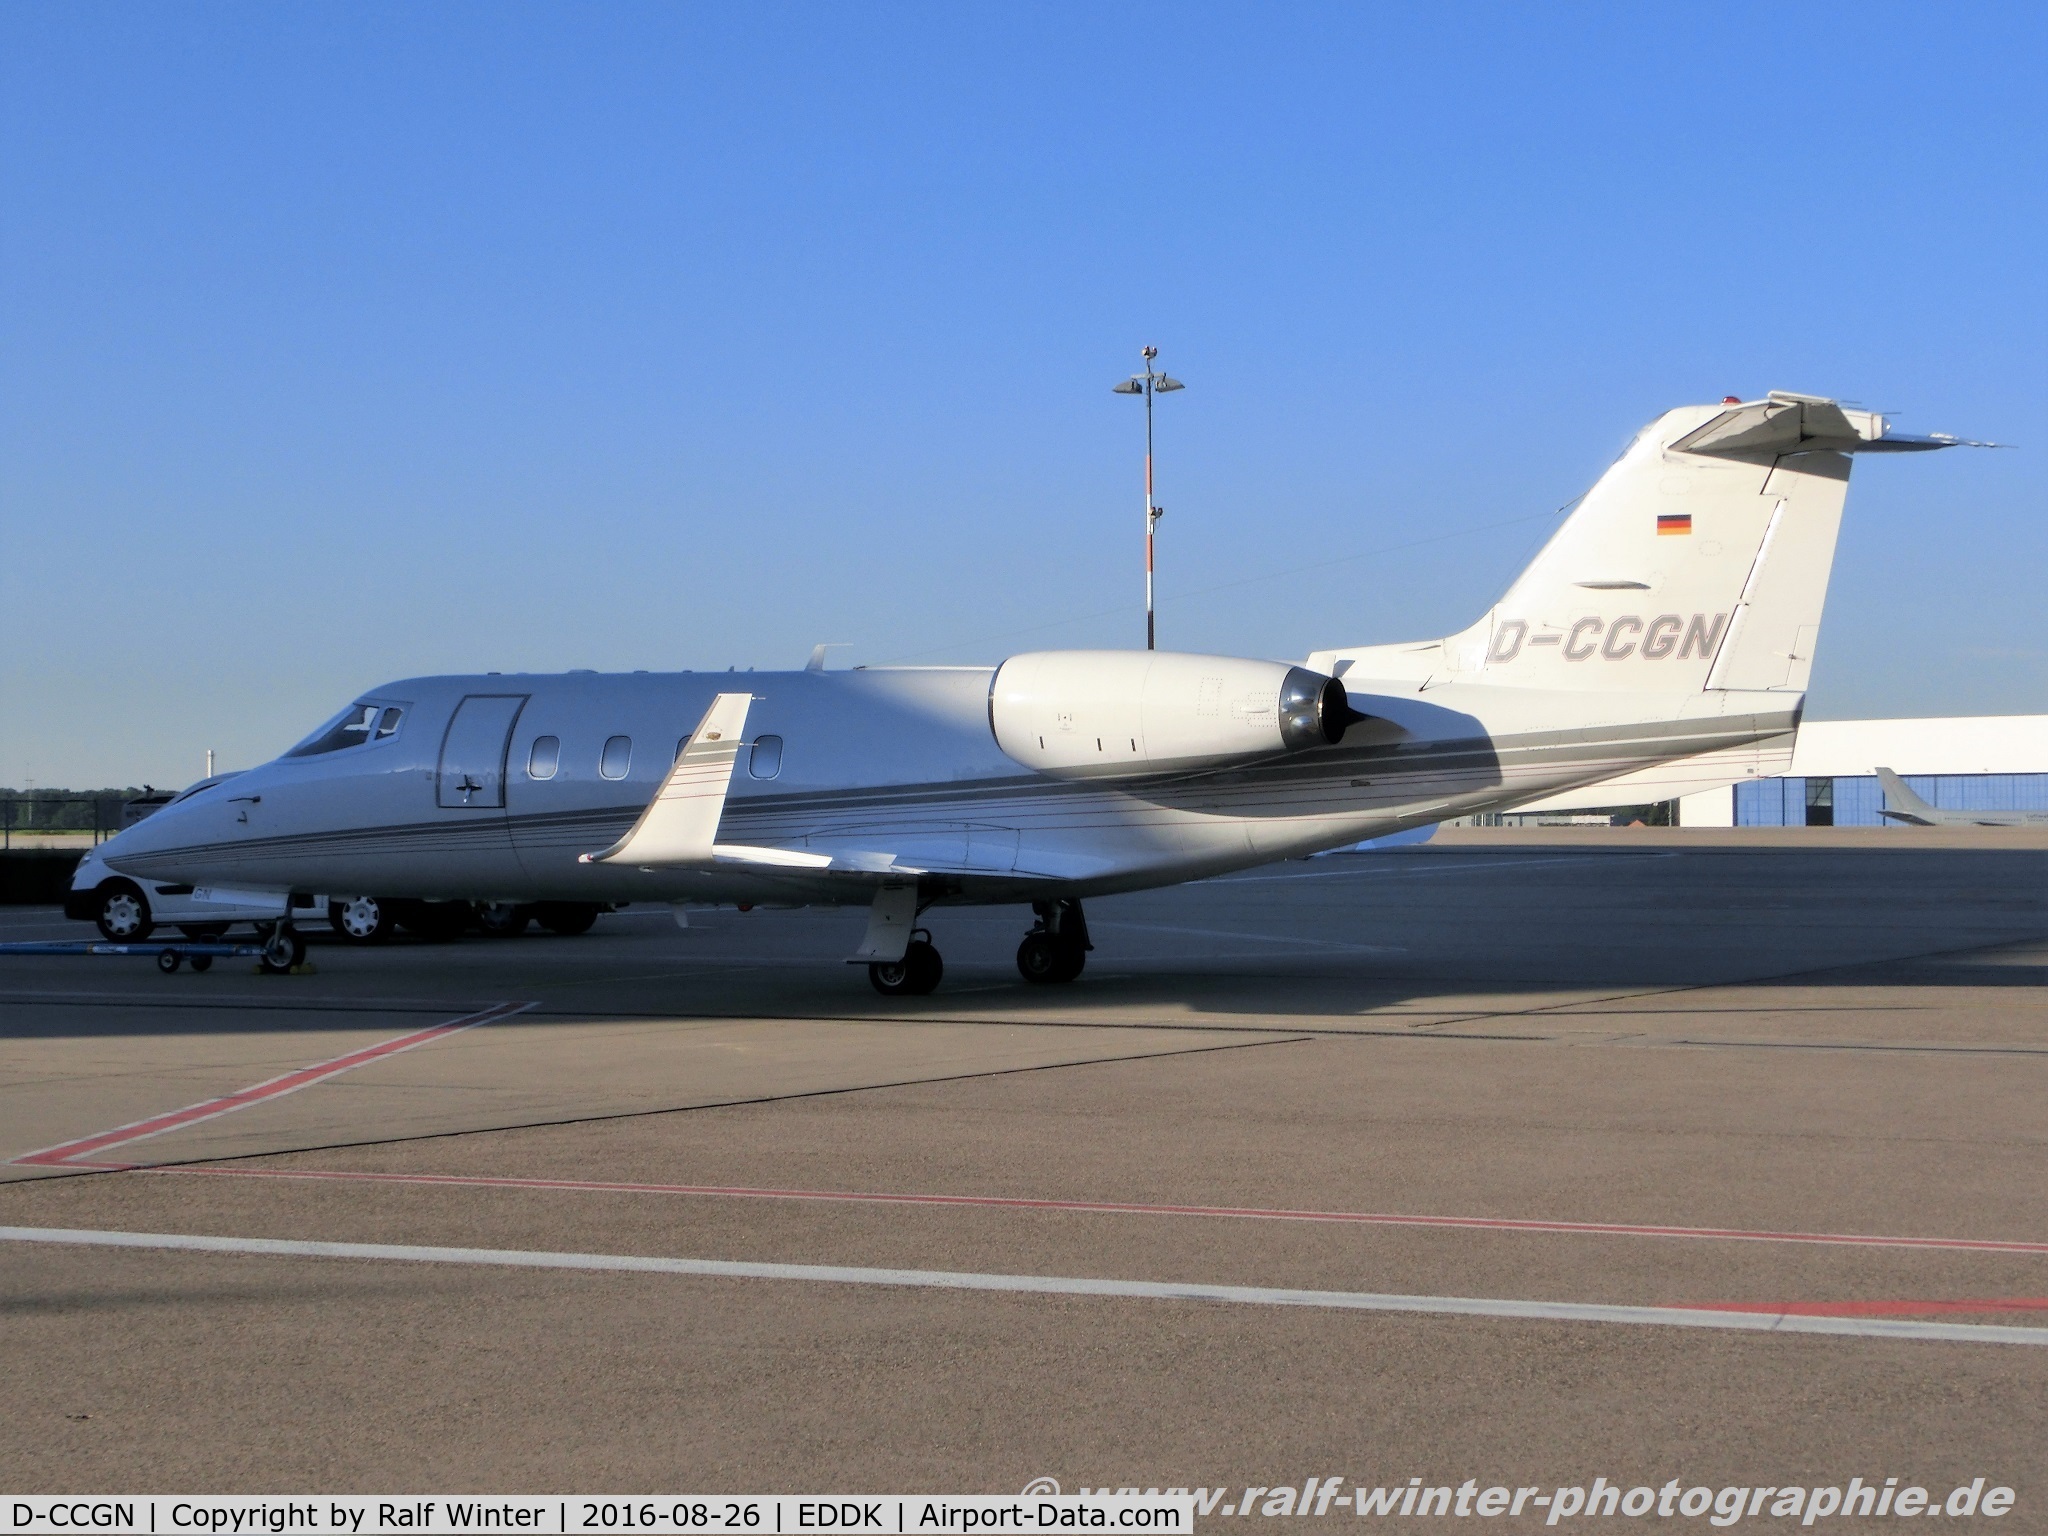 D-CCGN, 1981 Gates Leaarjet 55 C/N 55-017, Learjet 55 - QAJ Quick Air Charter - 55-017 - D-CCGN - 26.08.2016 - CGN